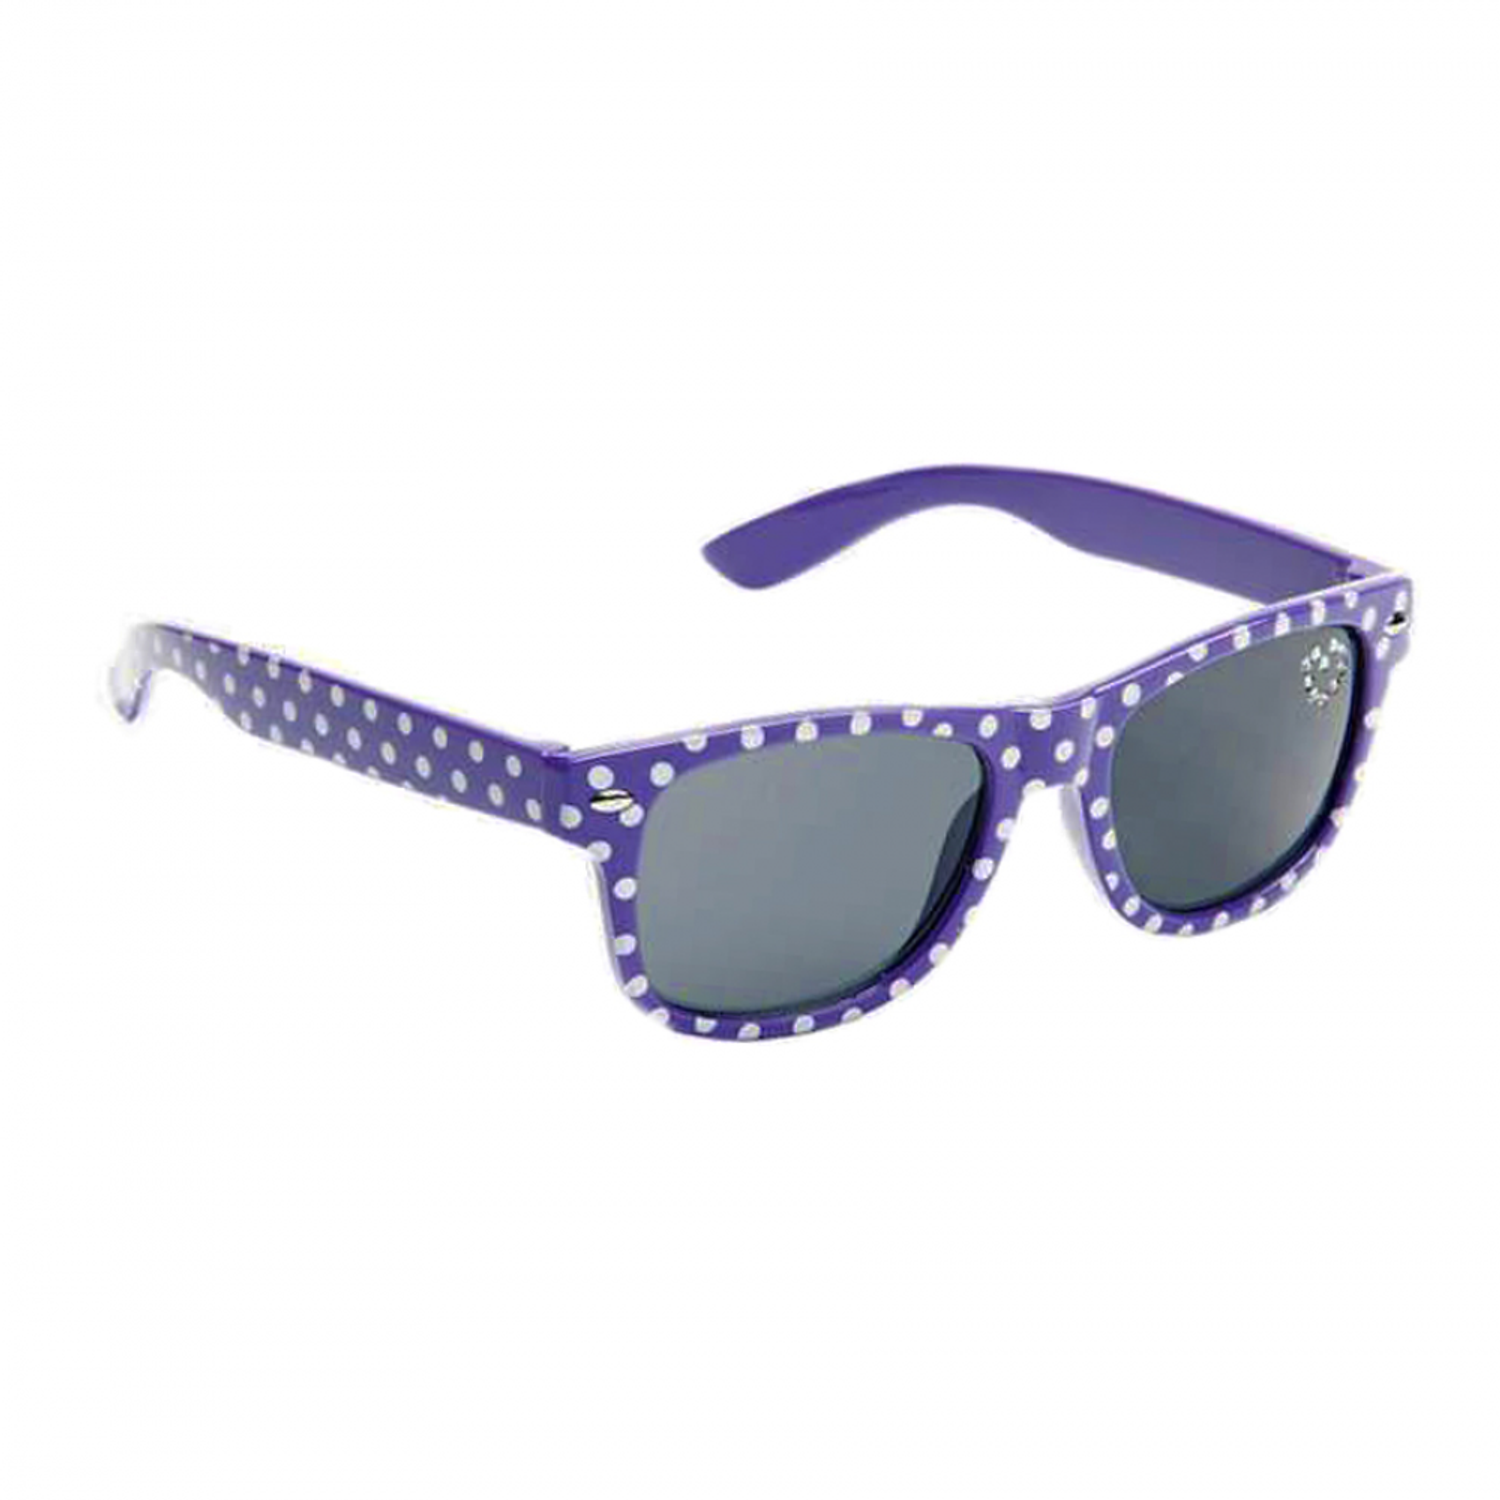 Очки солнцезащитные EYELEVEL pixie-purple - фото 1